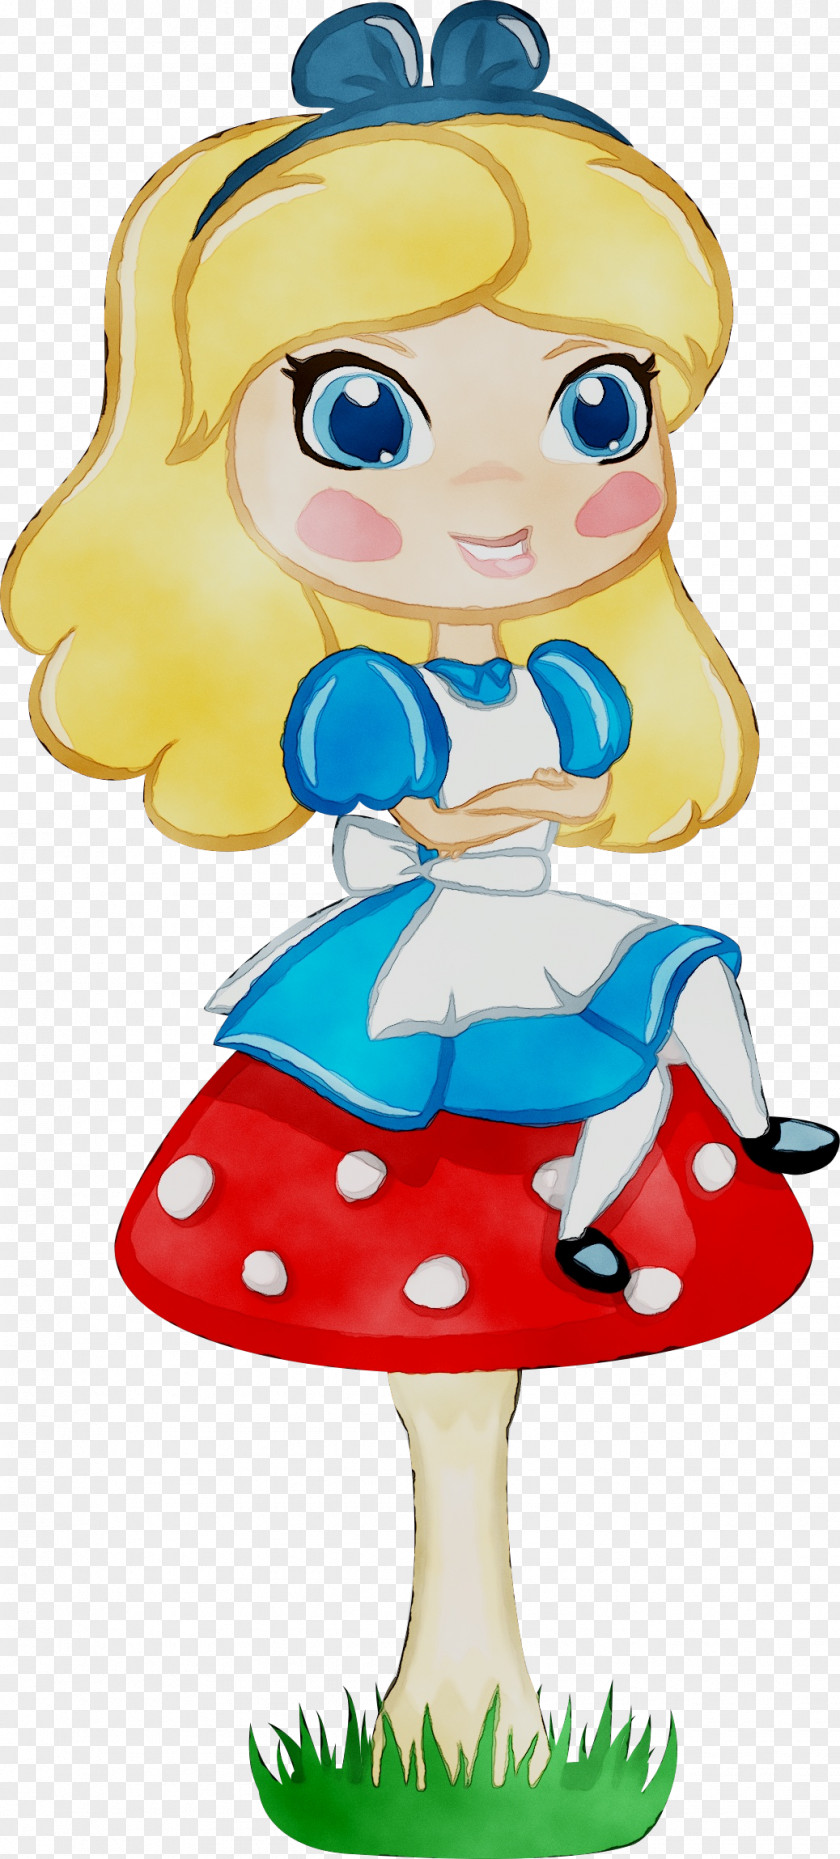 Alice's Adventures In Wonderland The Mad Hatter Clip Art Vector Graphics PNG